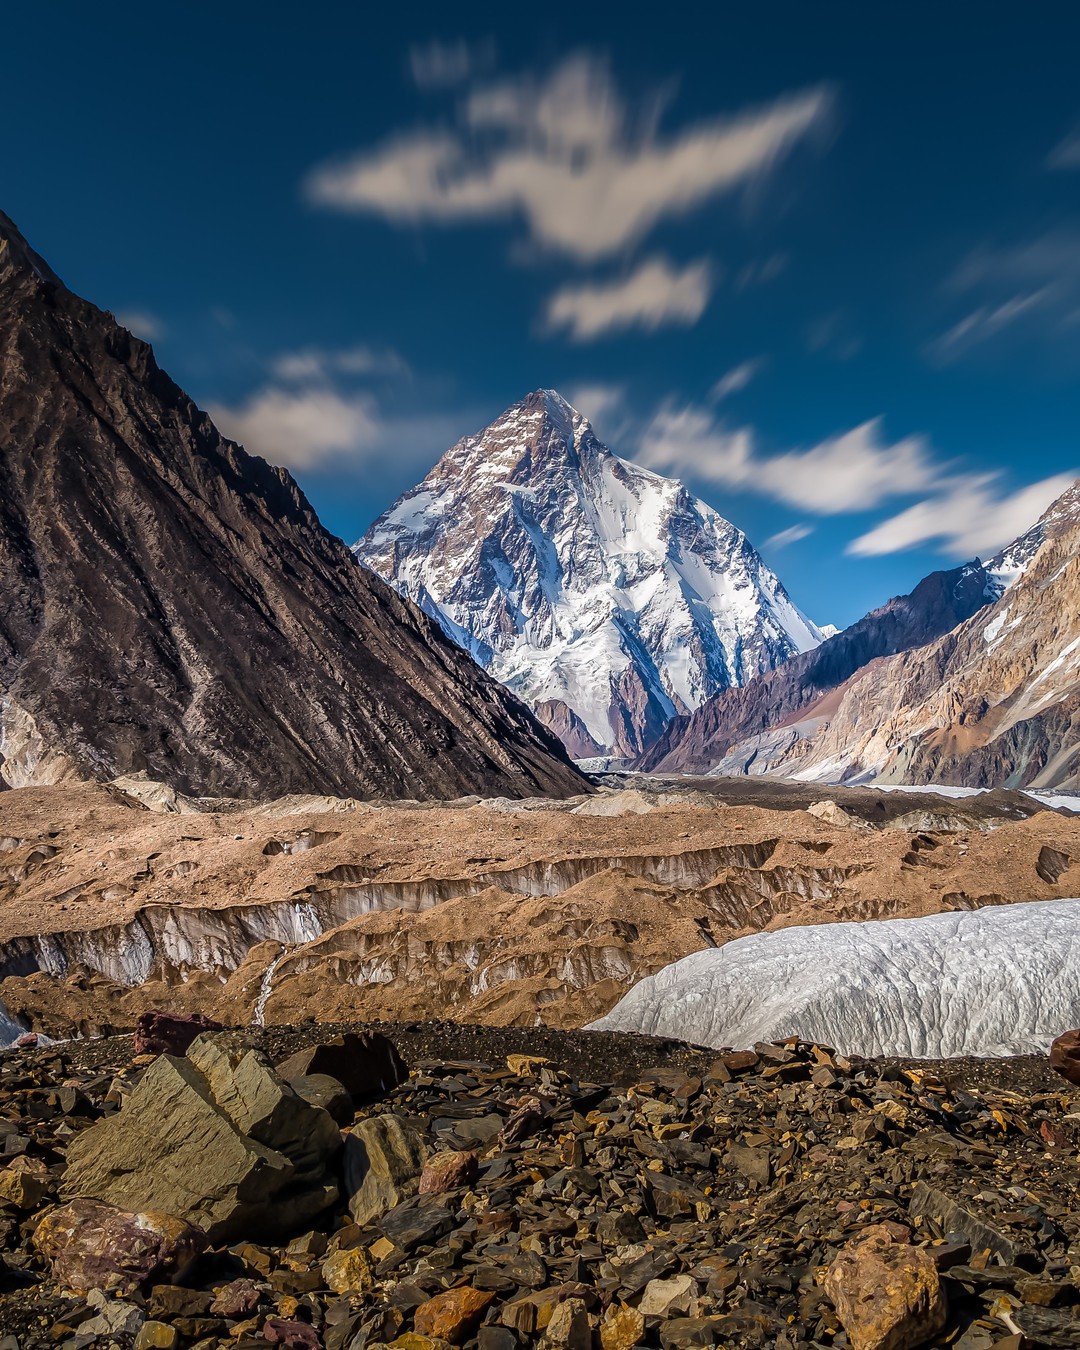 A long-exposure of #K2 in #Pakistan 🇵🇰. At 8,611m (28,251ft), K2 is the second-highest mountain in world – only Everest in Nepal is higher. However, K2 has a symmetry and grace that in my mind, makes it the most striking of the 14 eight-thousanders. ⁣
⁣
After nine days of trekking with @losthorizontreks we finally got our first view of the “Savage Mountain”. Still over 12km away, K2 rose above the surrounding mountains, its towering presence utterly overwhelming.

Flanked by five of the world's 17 highest mountains, K2 soars in proud isolation over its neighbours. It is an awesome, frightening mountain.
-⠀
-⠀
-⠀
-⠀
-⠀
#k2basecamp #k2basecamptrek #k2trek #Karakoram #Pakistan #concordia #k2peak #himalayas #gilgitbaltistan #baltoro #BaltoroGlacier #beautifulpakistan #travelpeacefulpakistan #gondogorola #gondogorolapass #gondogorolatrek #gondogoropass #lonelyplanet #lppathfinders #karakoramrange #viewsofpakistan #incrediblepakistan #incrediblehunza #naturepakistan #destinationpakistan #tkcinsta #thekarakoramclub #dawndotcom